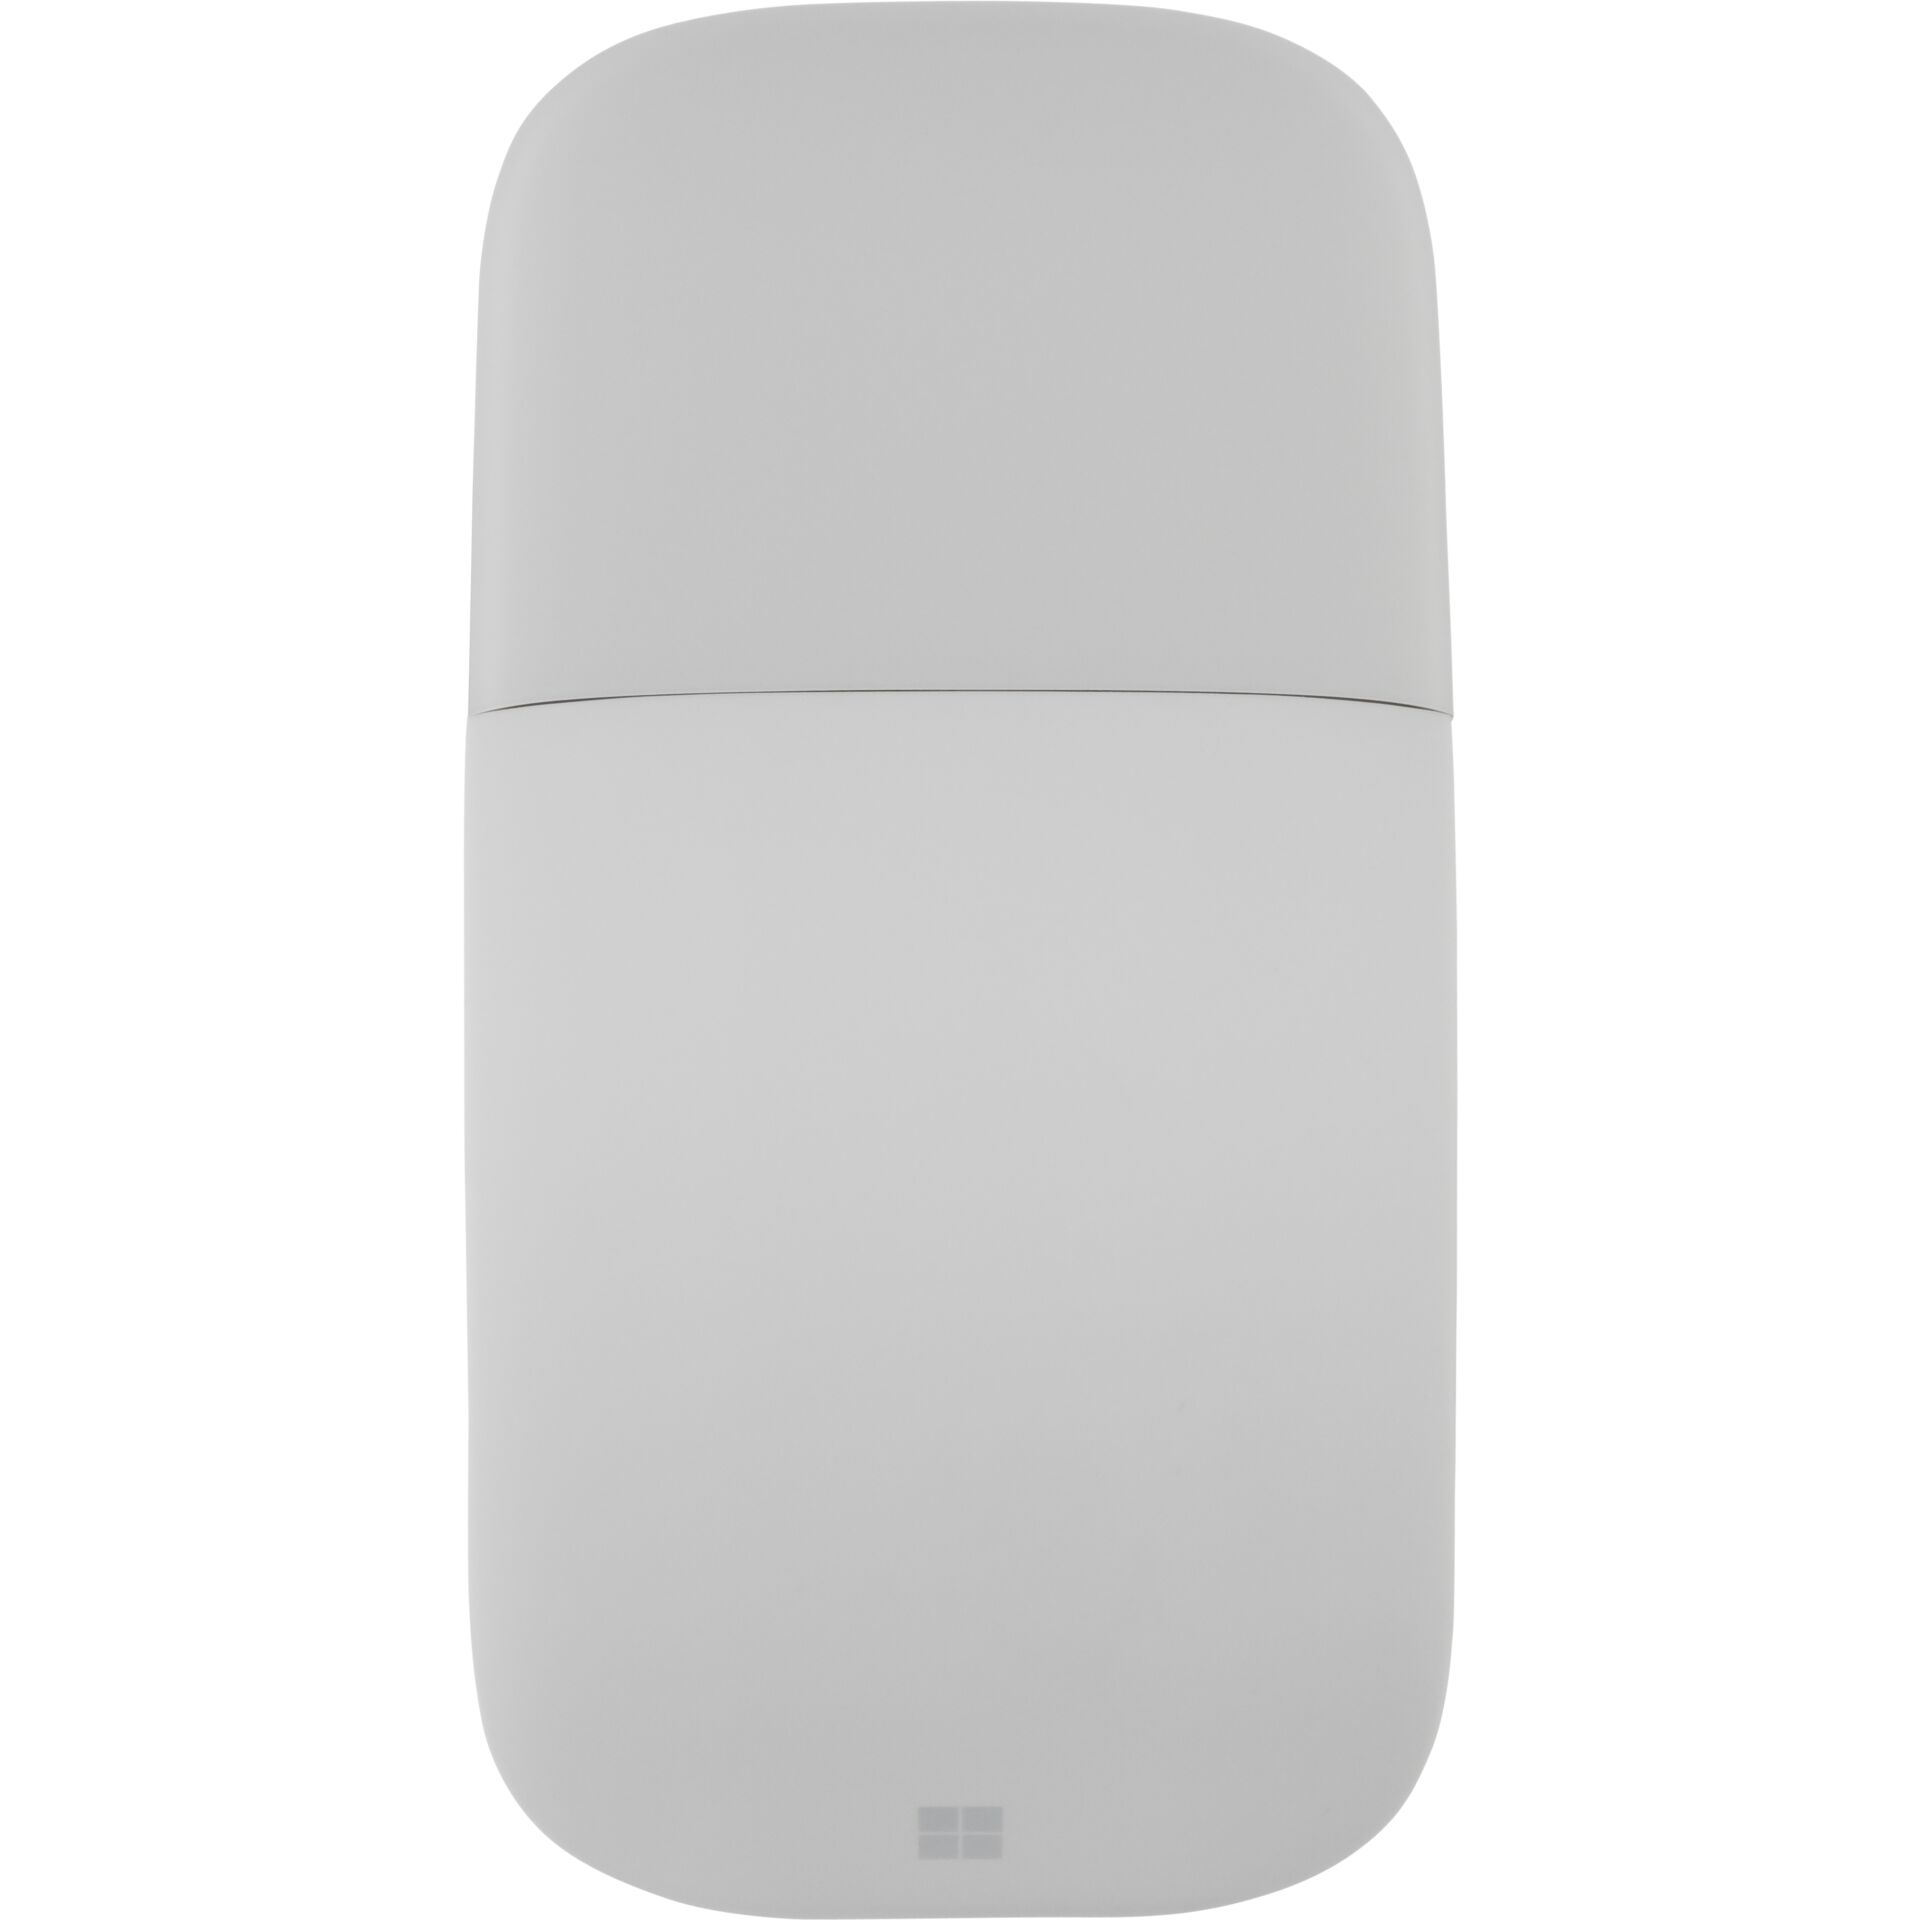 Microsoft Surface Arc Maus, beidhändig, kabellos (Bluetooth)